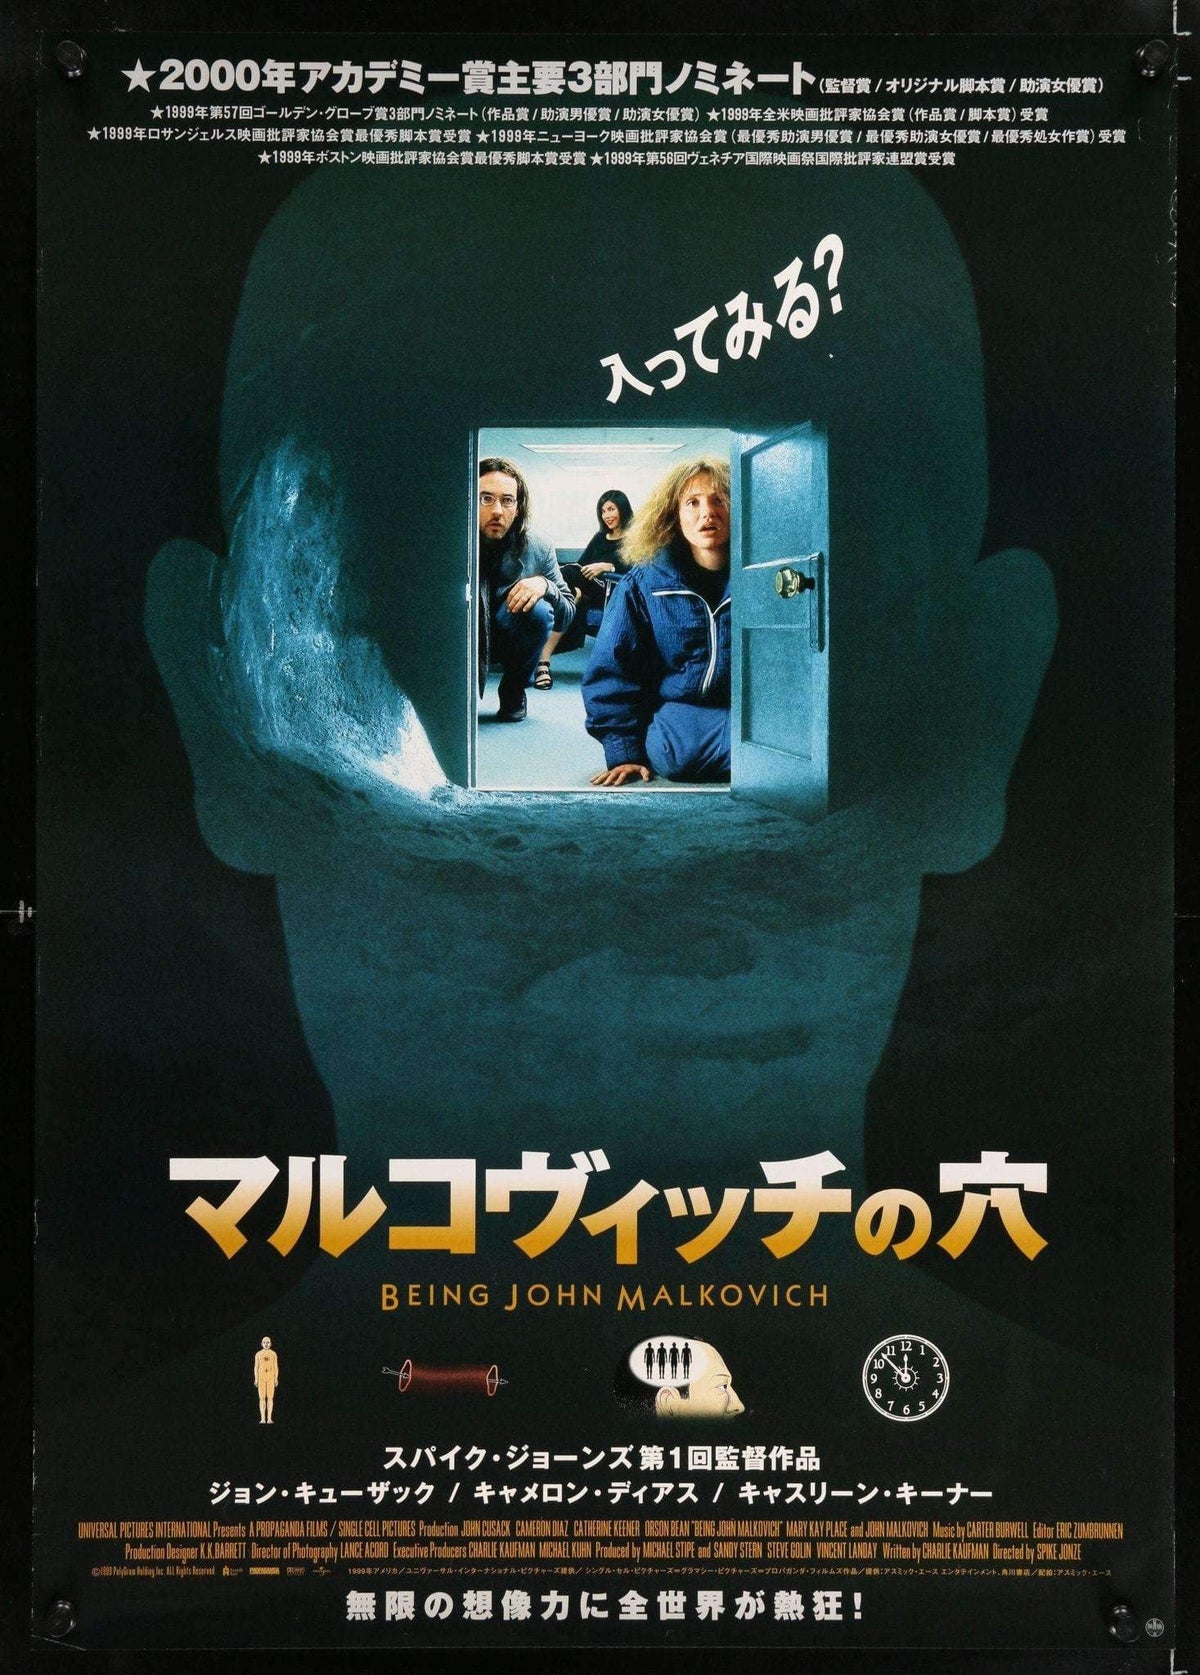 Being John Malkovich (1999) original movie poster for sale at Original Film Art